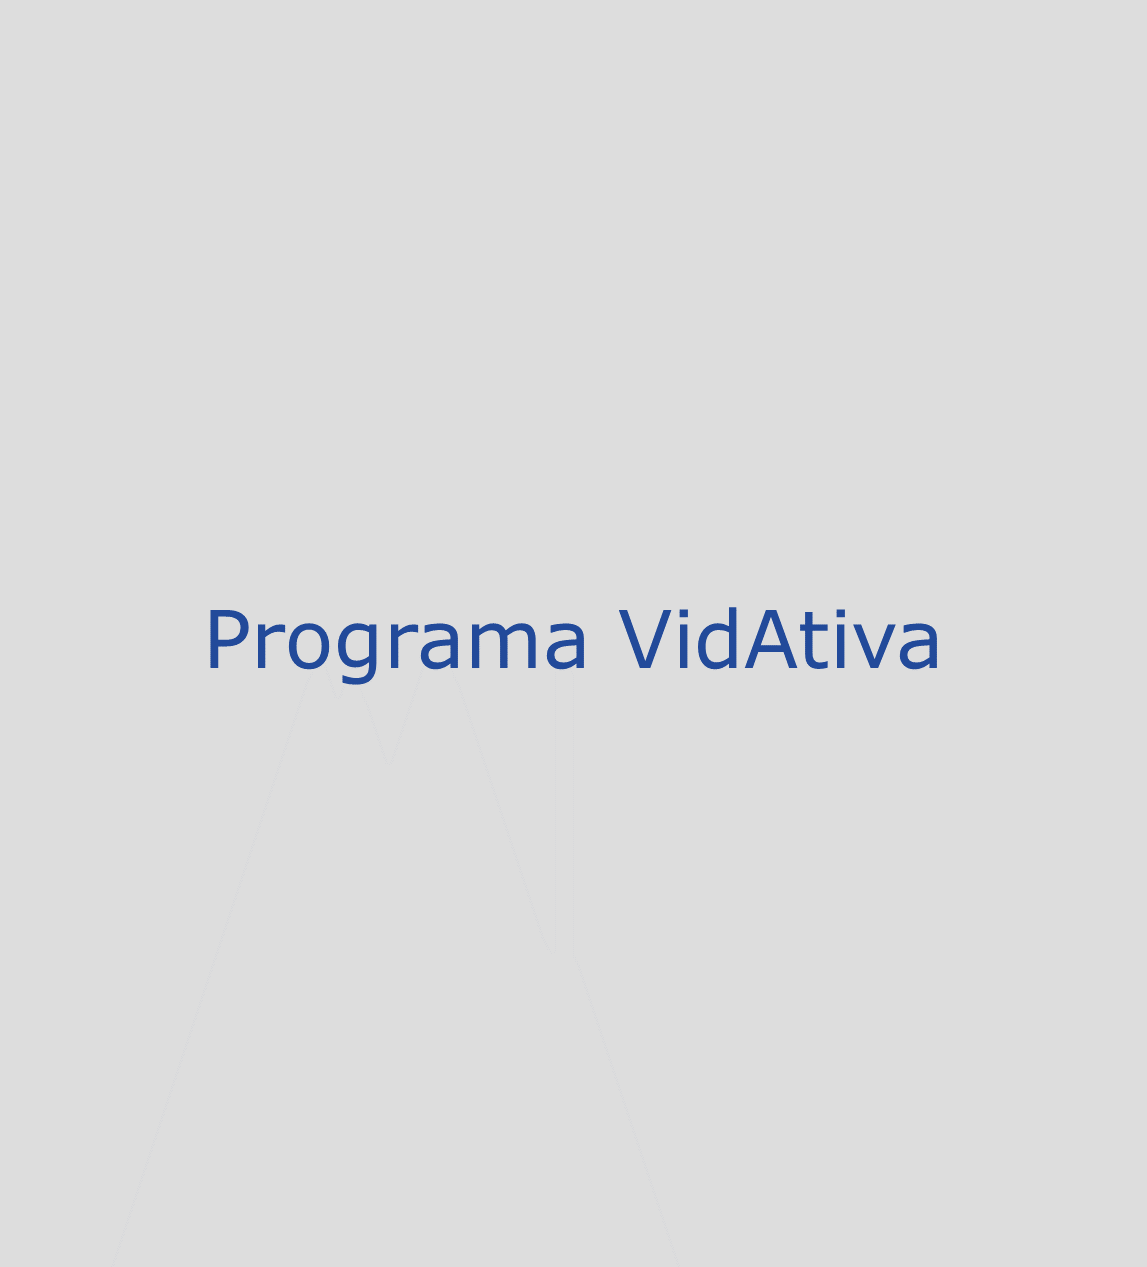 Programa VidAtiva